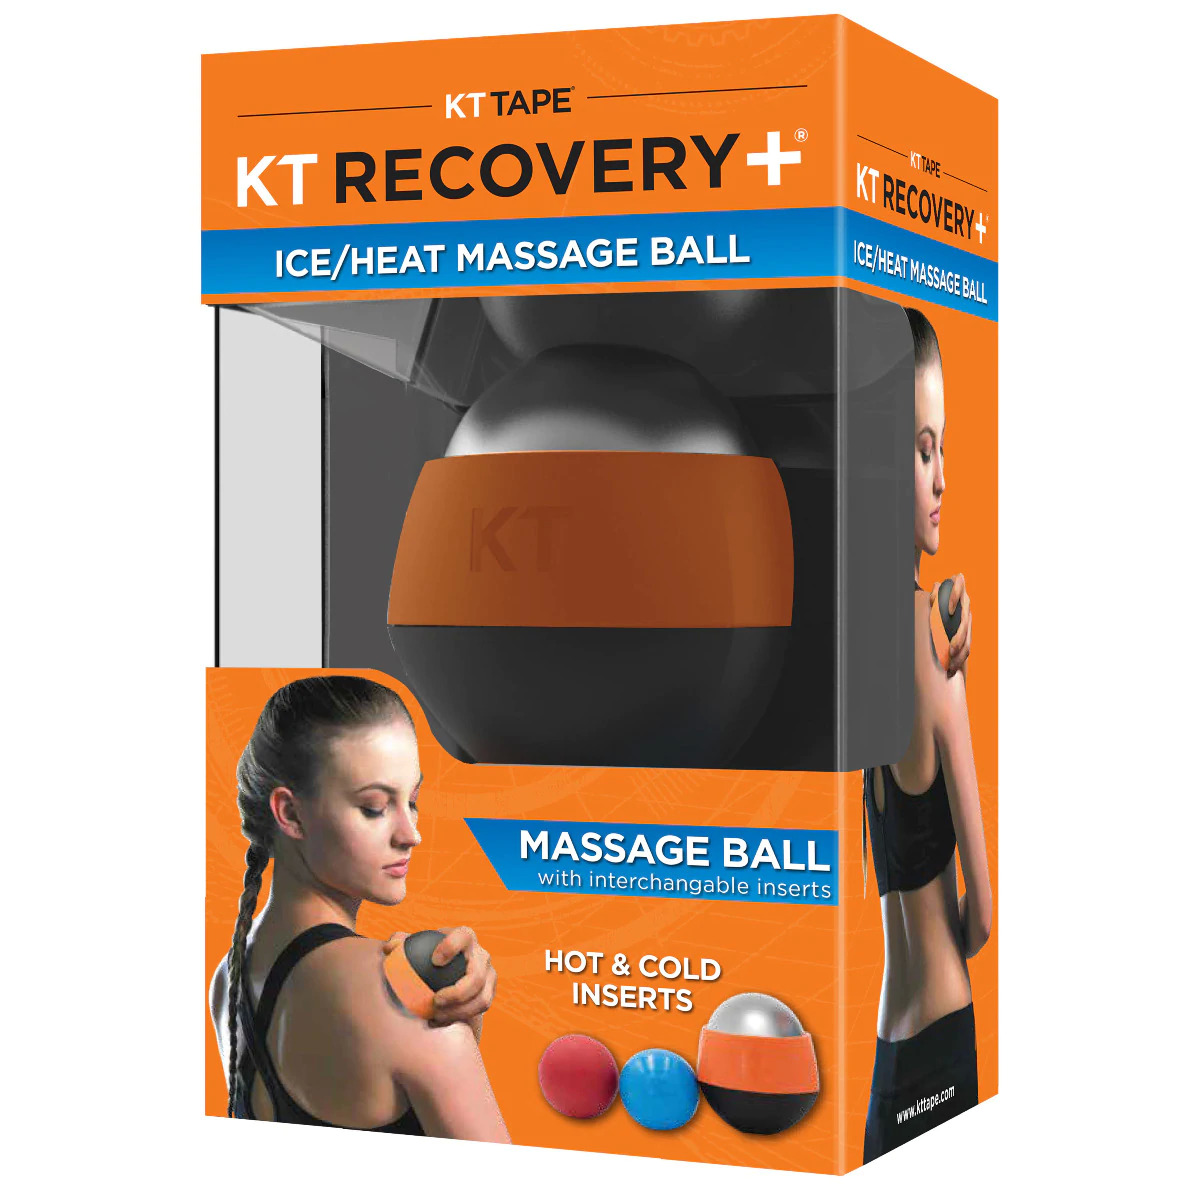 KT Tape Recovery+® Ice/Heat Massage Ball $27.99